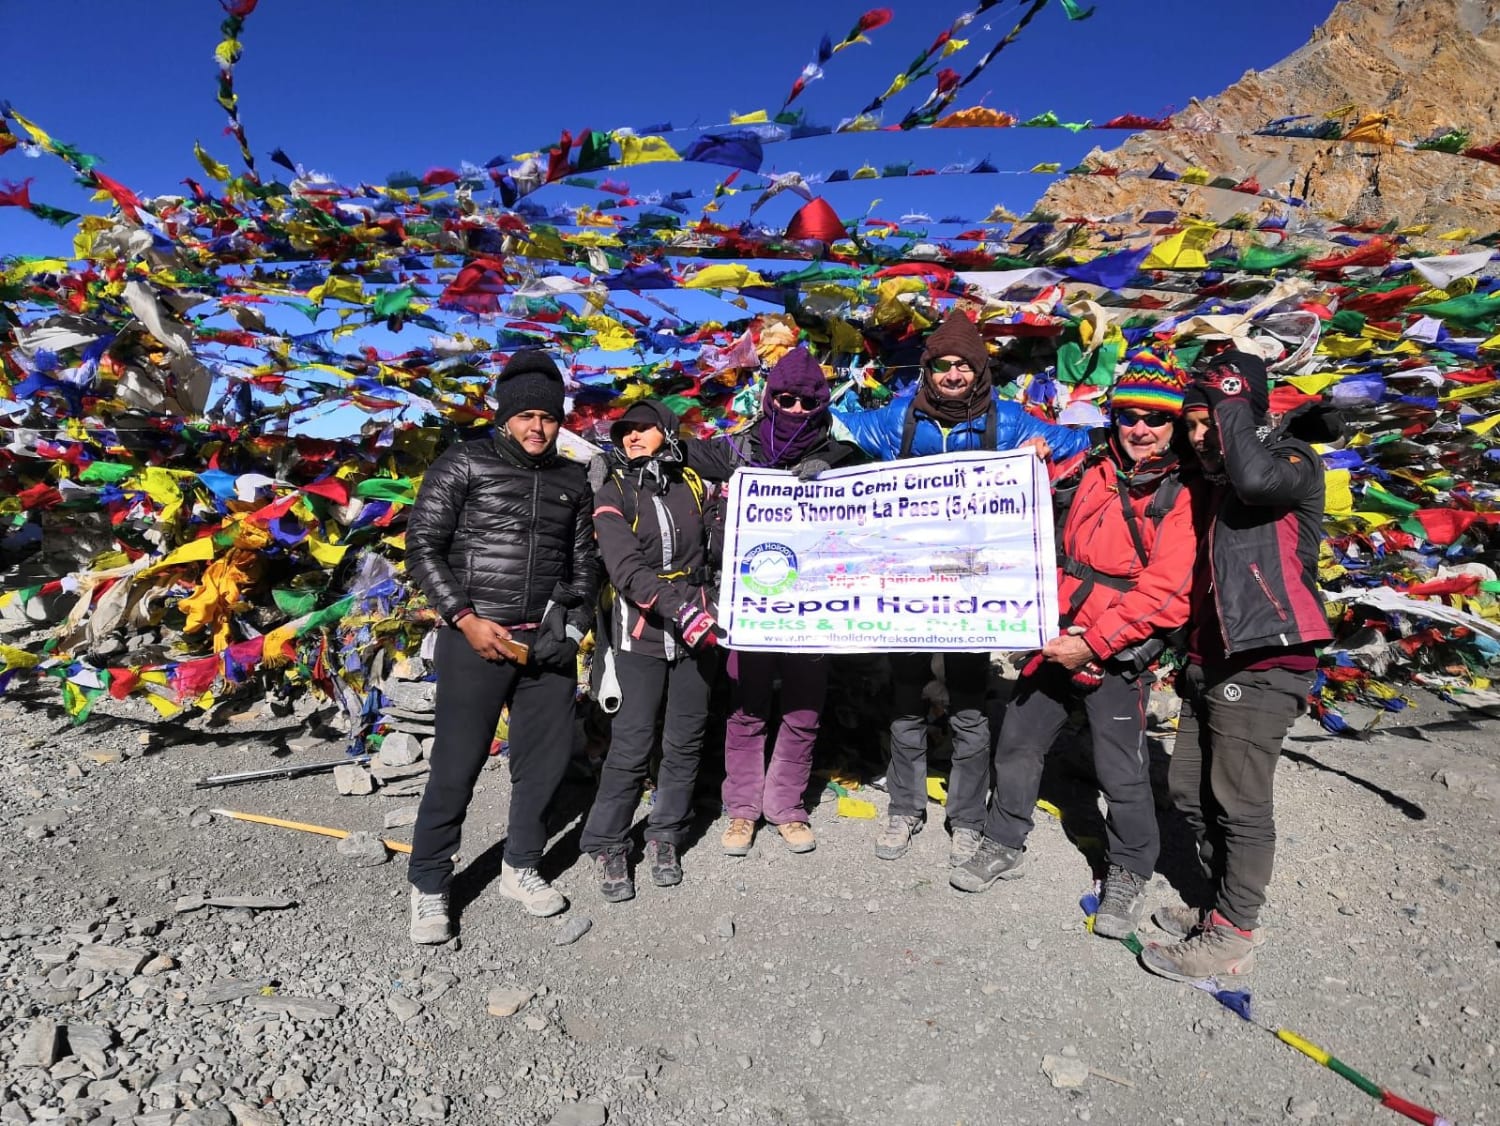 Annapurna Circuit Trek in September, October and November